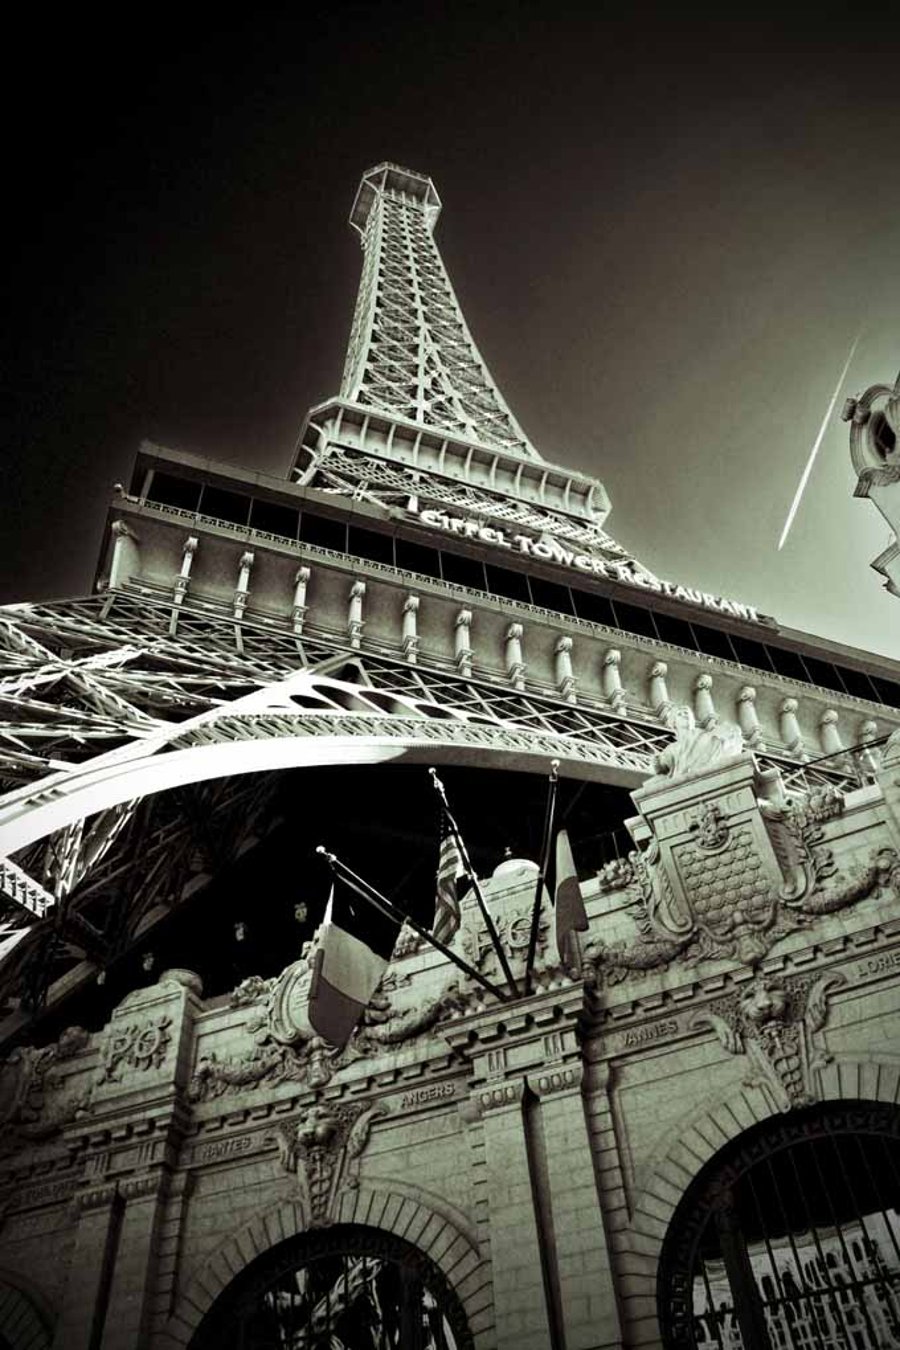 Eiffel Tower Paris Hotel Las Vegas United States Of America Photograph Print